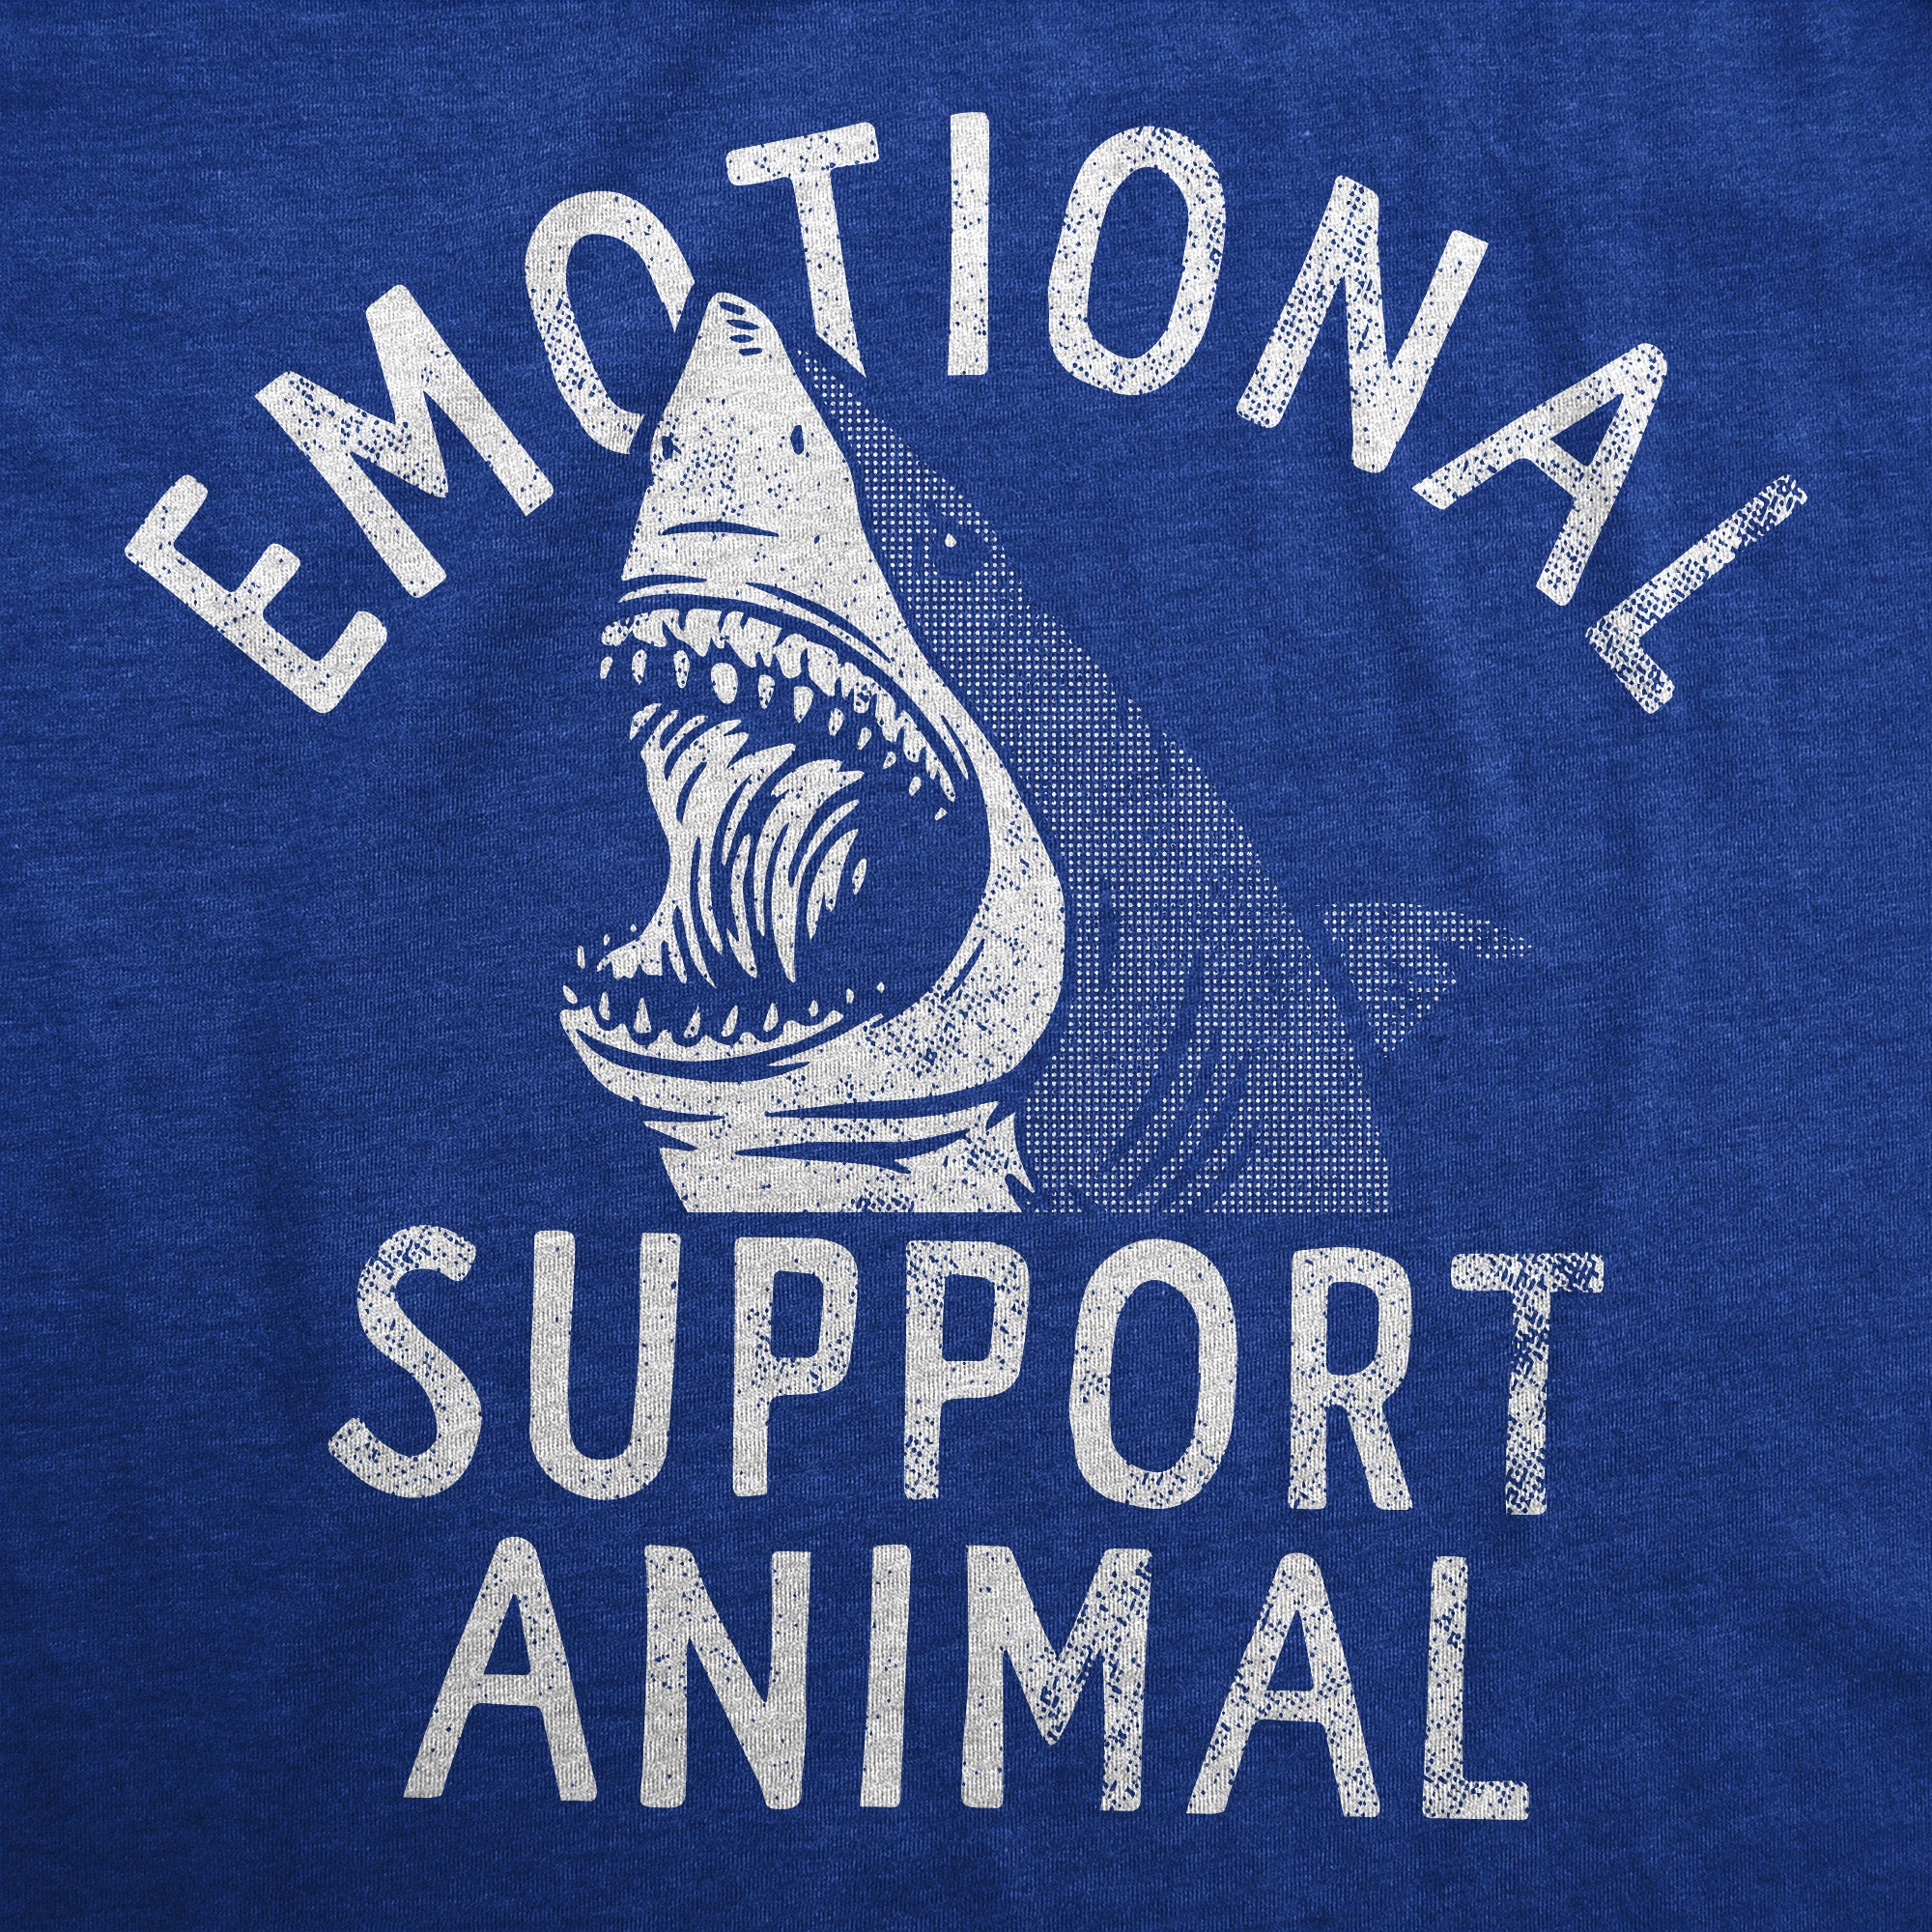 Funny Heather Royal - SUPPORT Emotional Support Animal Shark Mens T Shirt Nerdy shark week animal sarcastic Tee